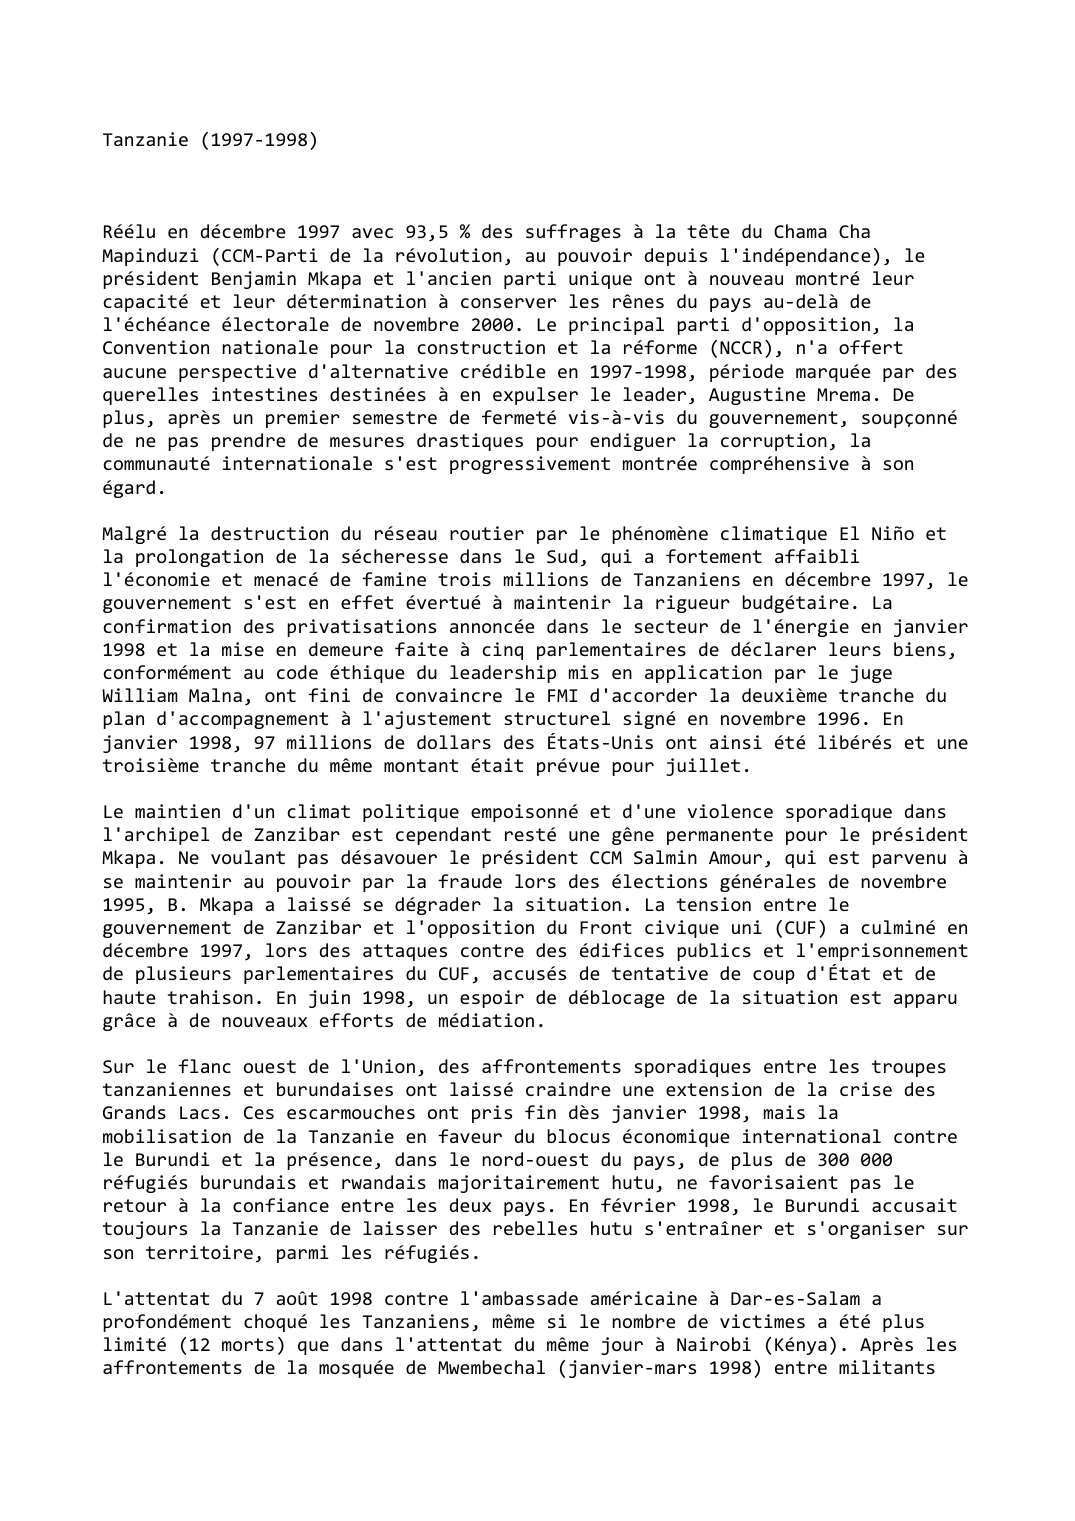 Prévisualisation du document Tanzanie (1997-1998)